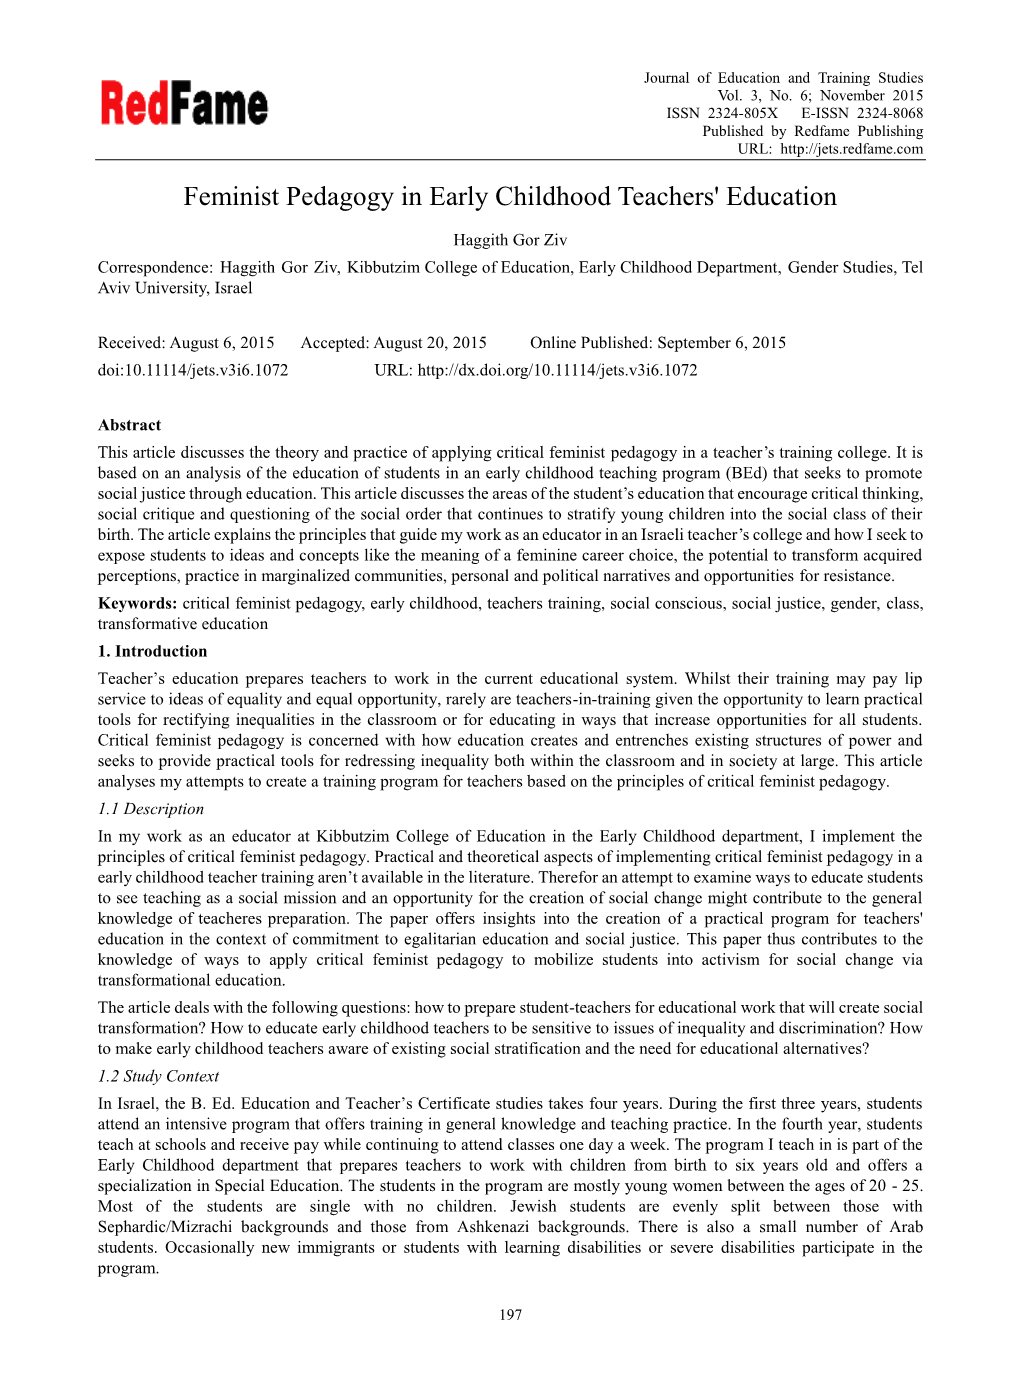 Feminist Pedagogy in Early Childhood Teachers' Education